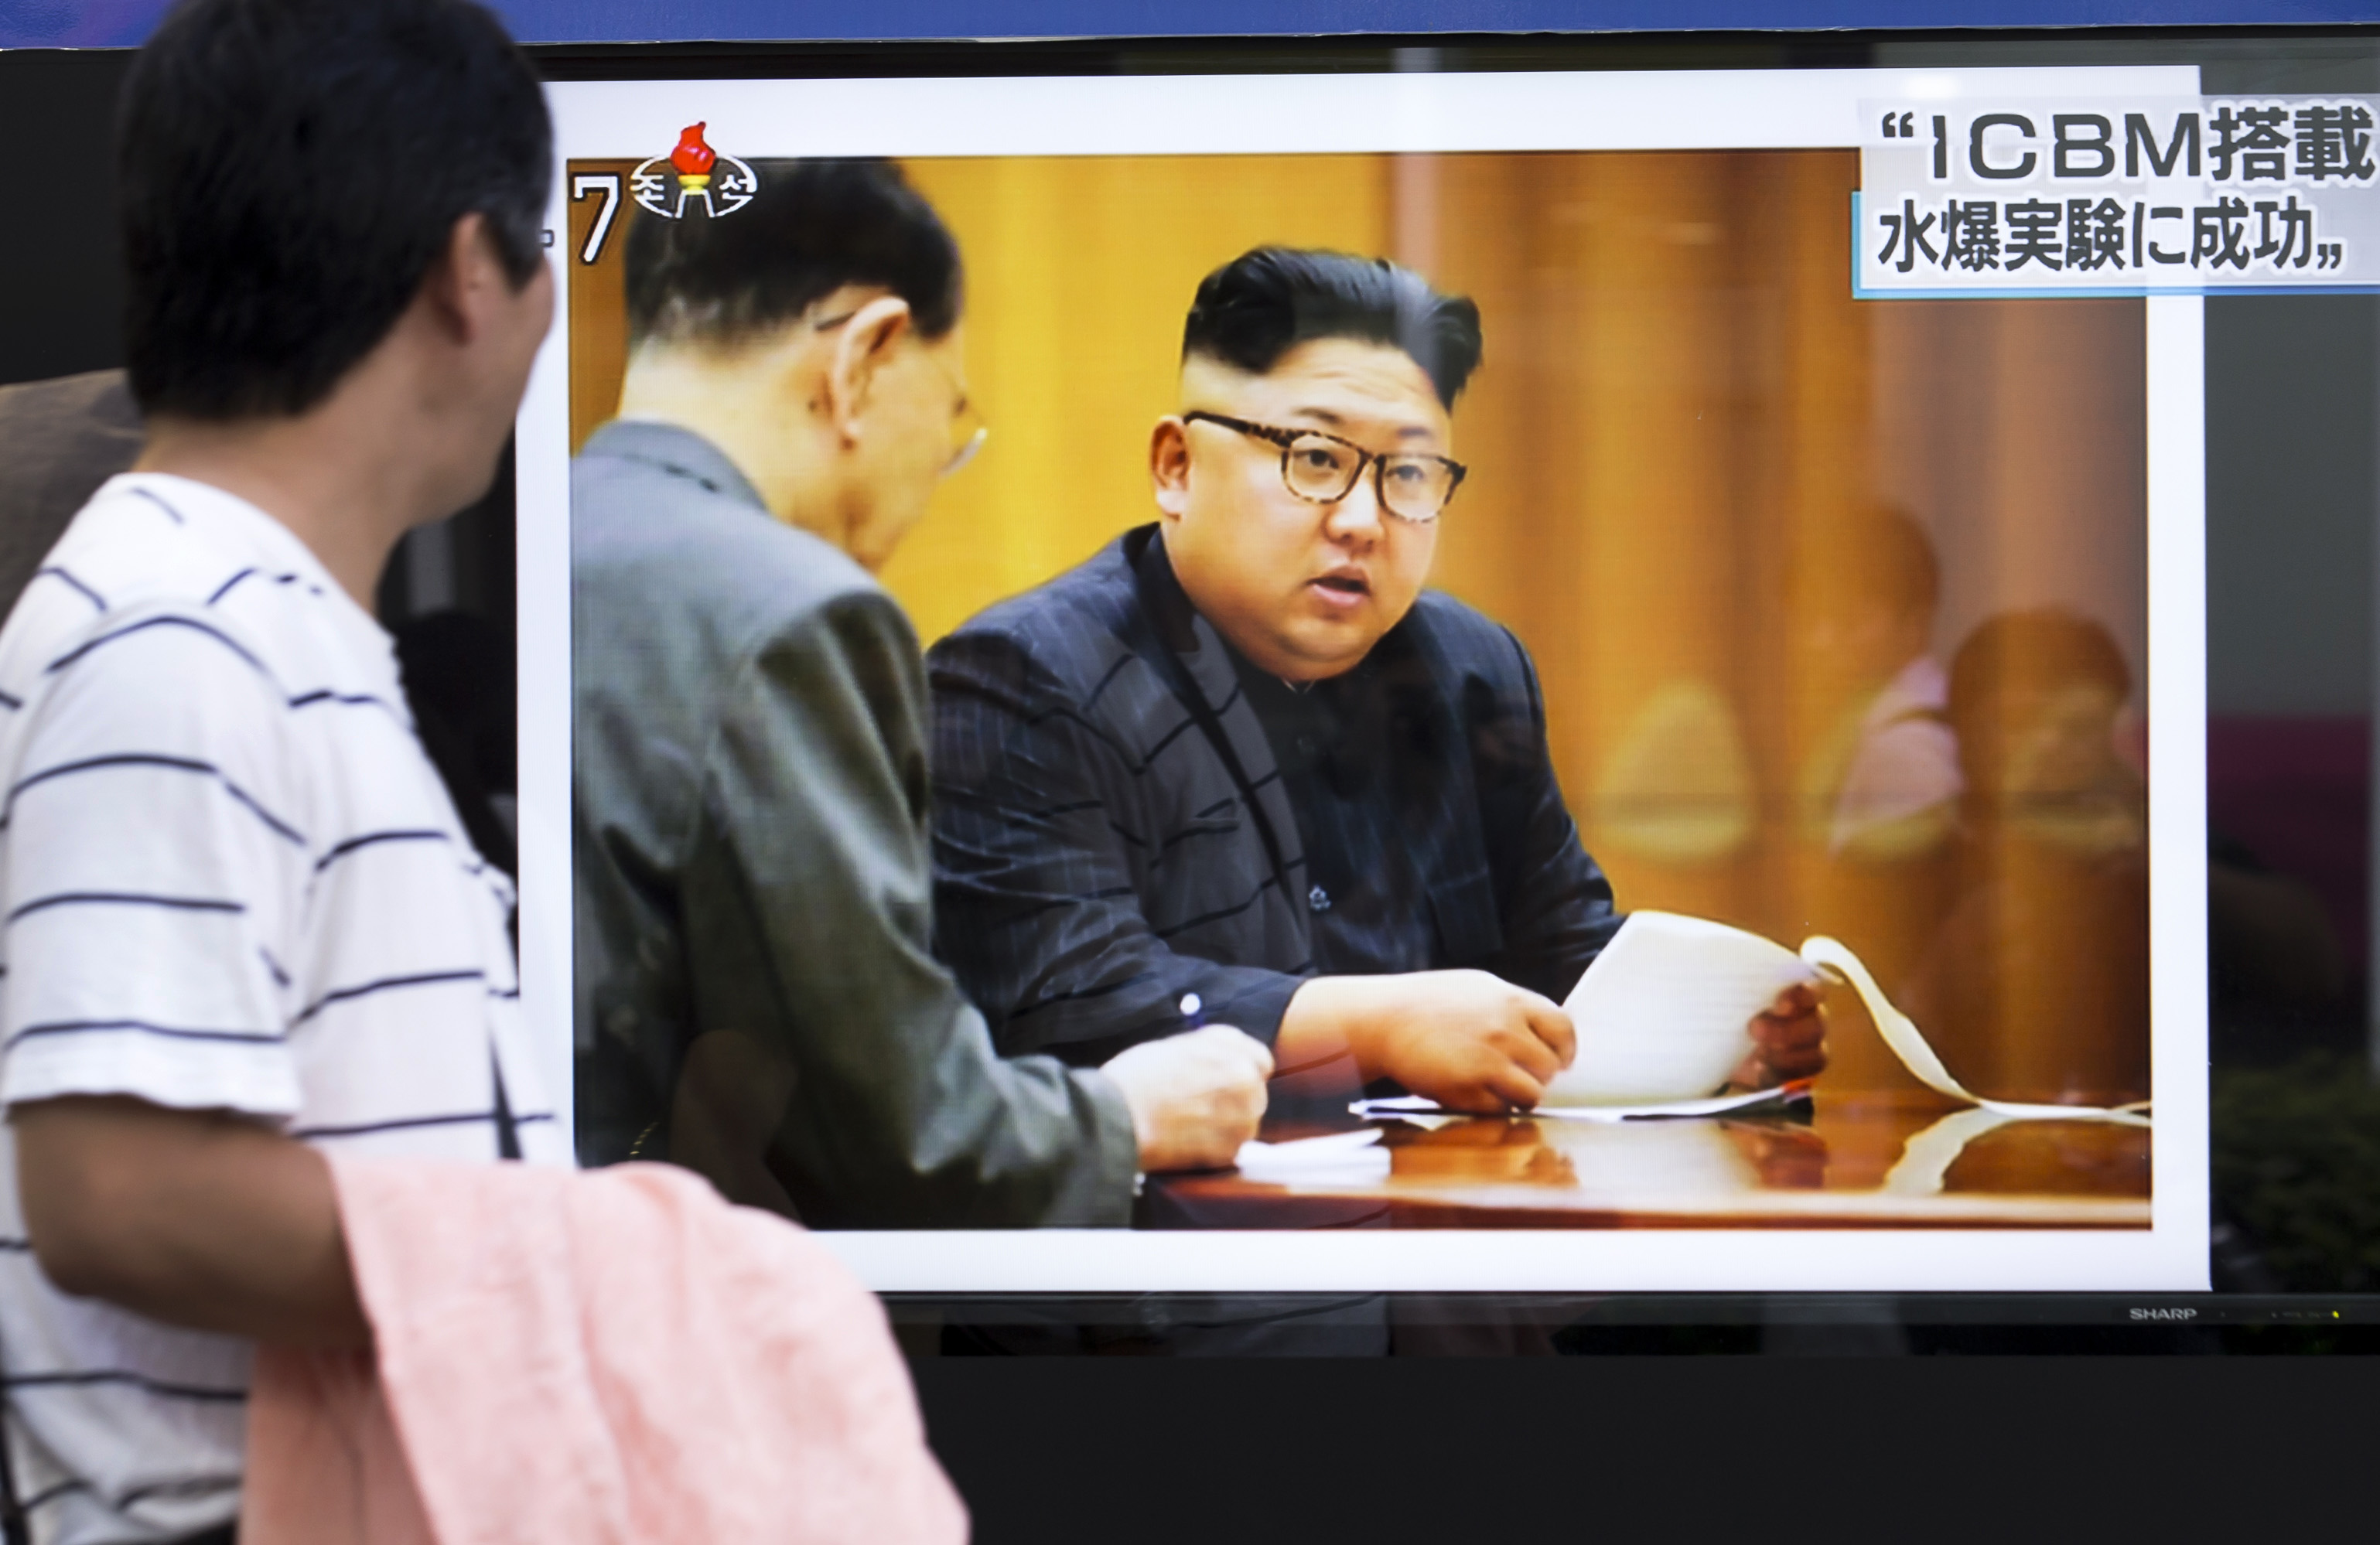 Kim Jong Un on a news program